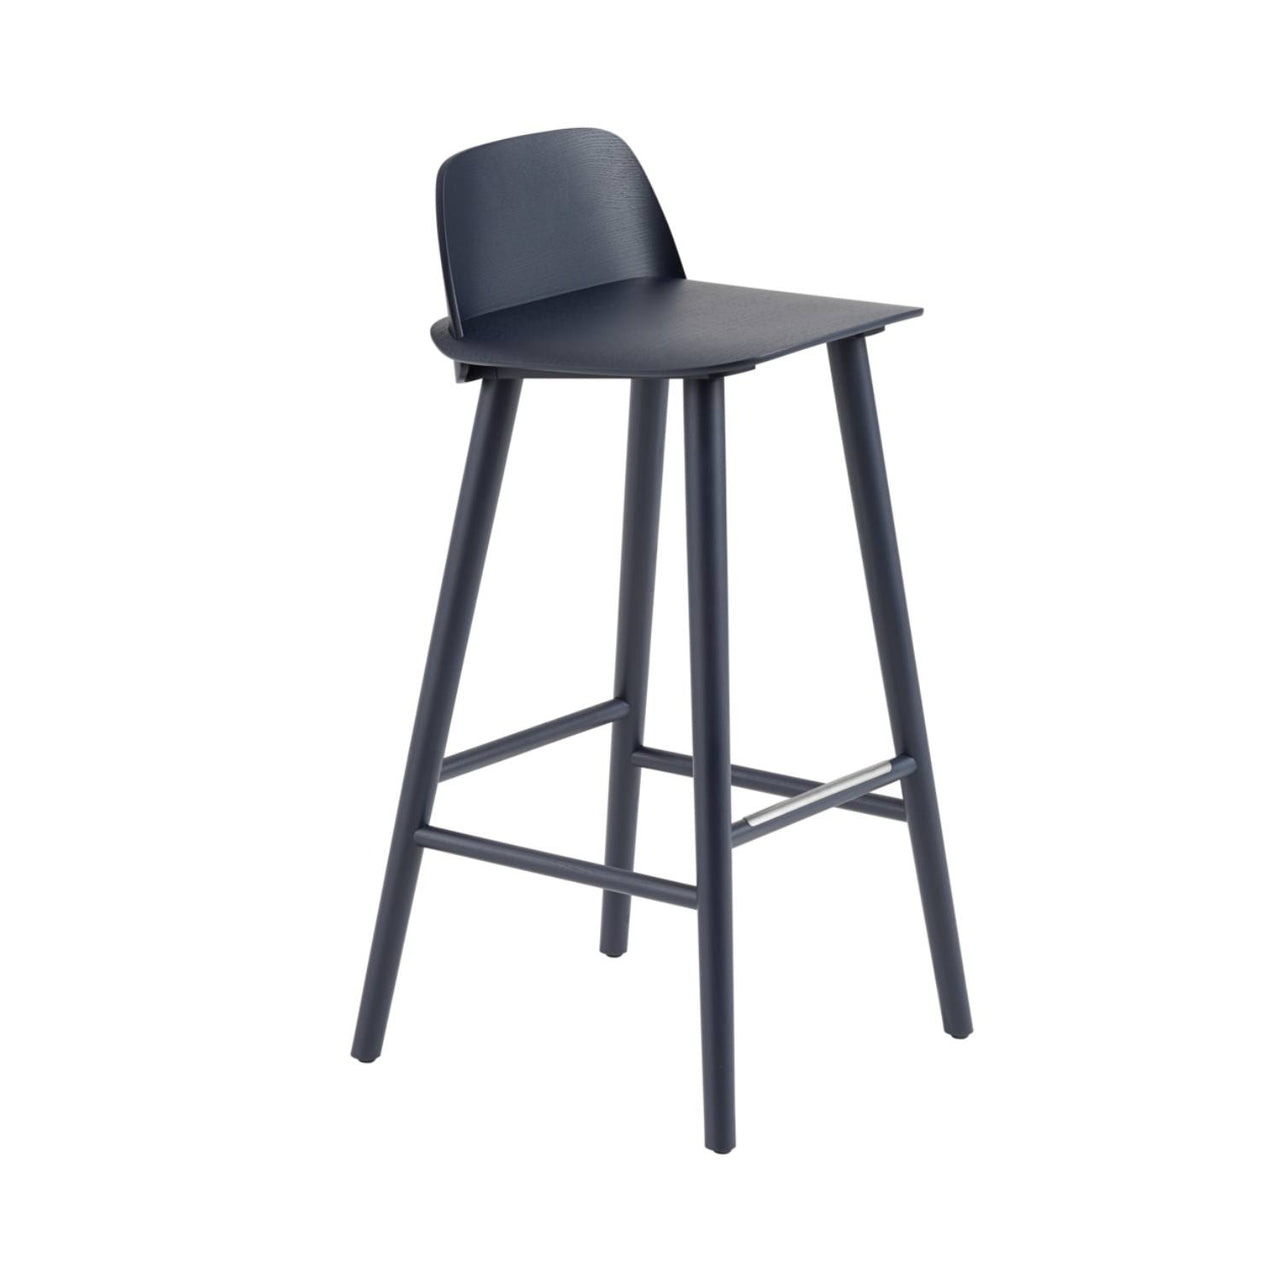 Nerd Bar + Counter Stool: Steel Footrest + Bar + Midnigt Blue